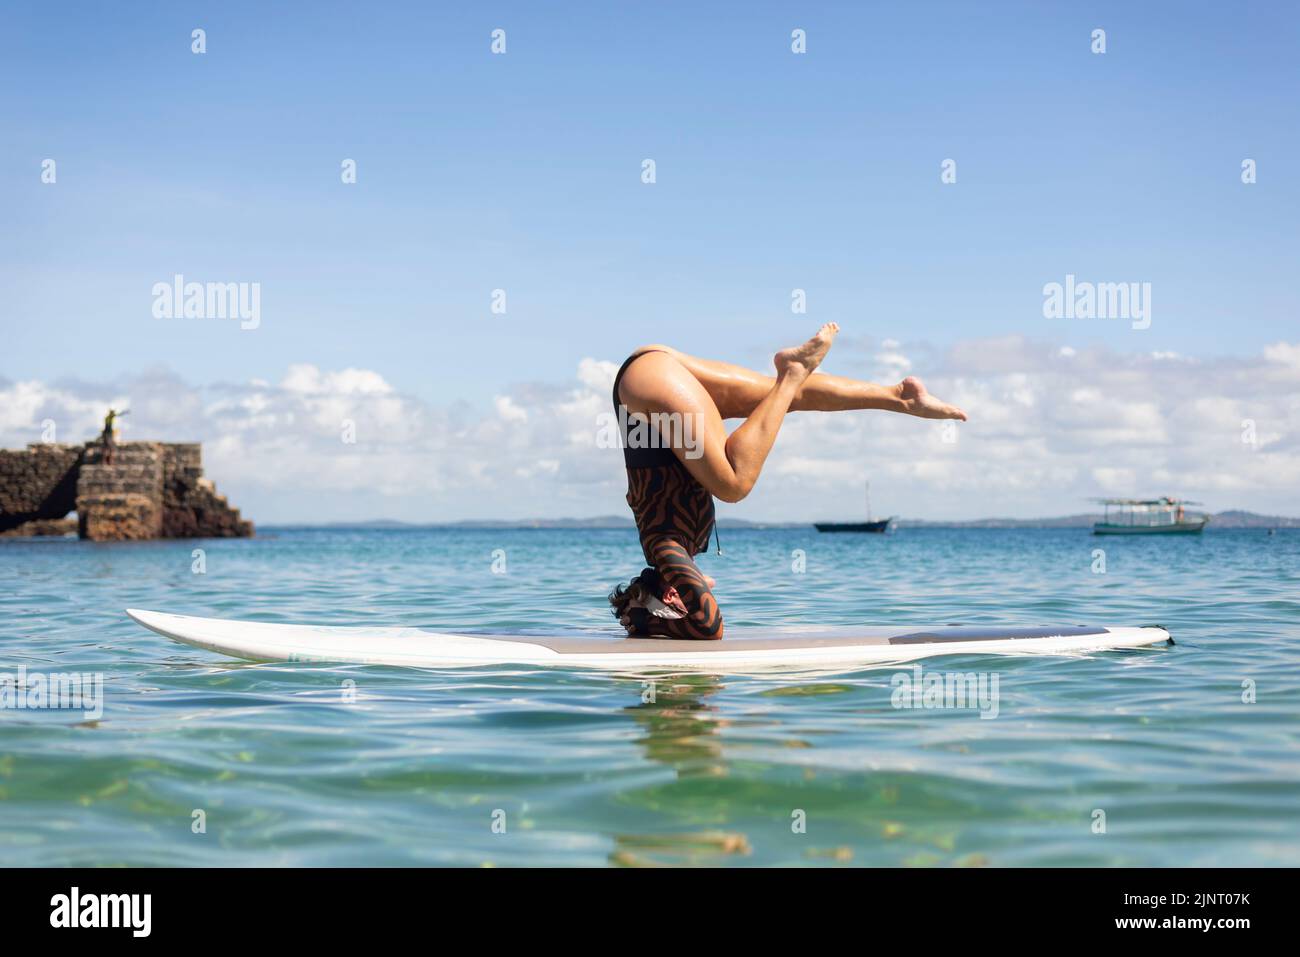 Salvador, Bahia, Brazil - June 04, 2022: Woman stands upside down on a surfboard at Porto da Barra beach in Salvador, Bahia. Stock Photo